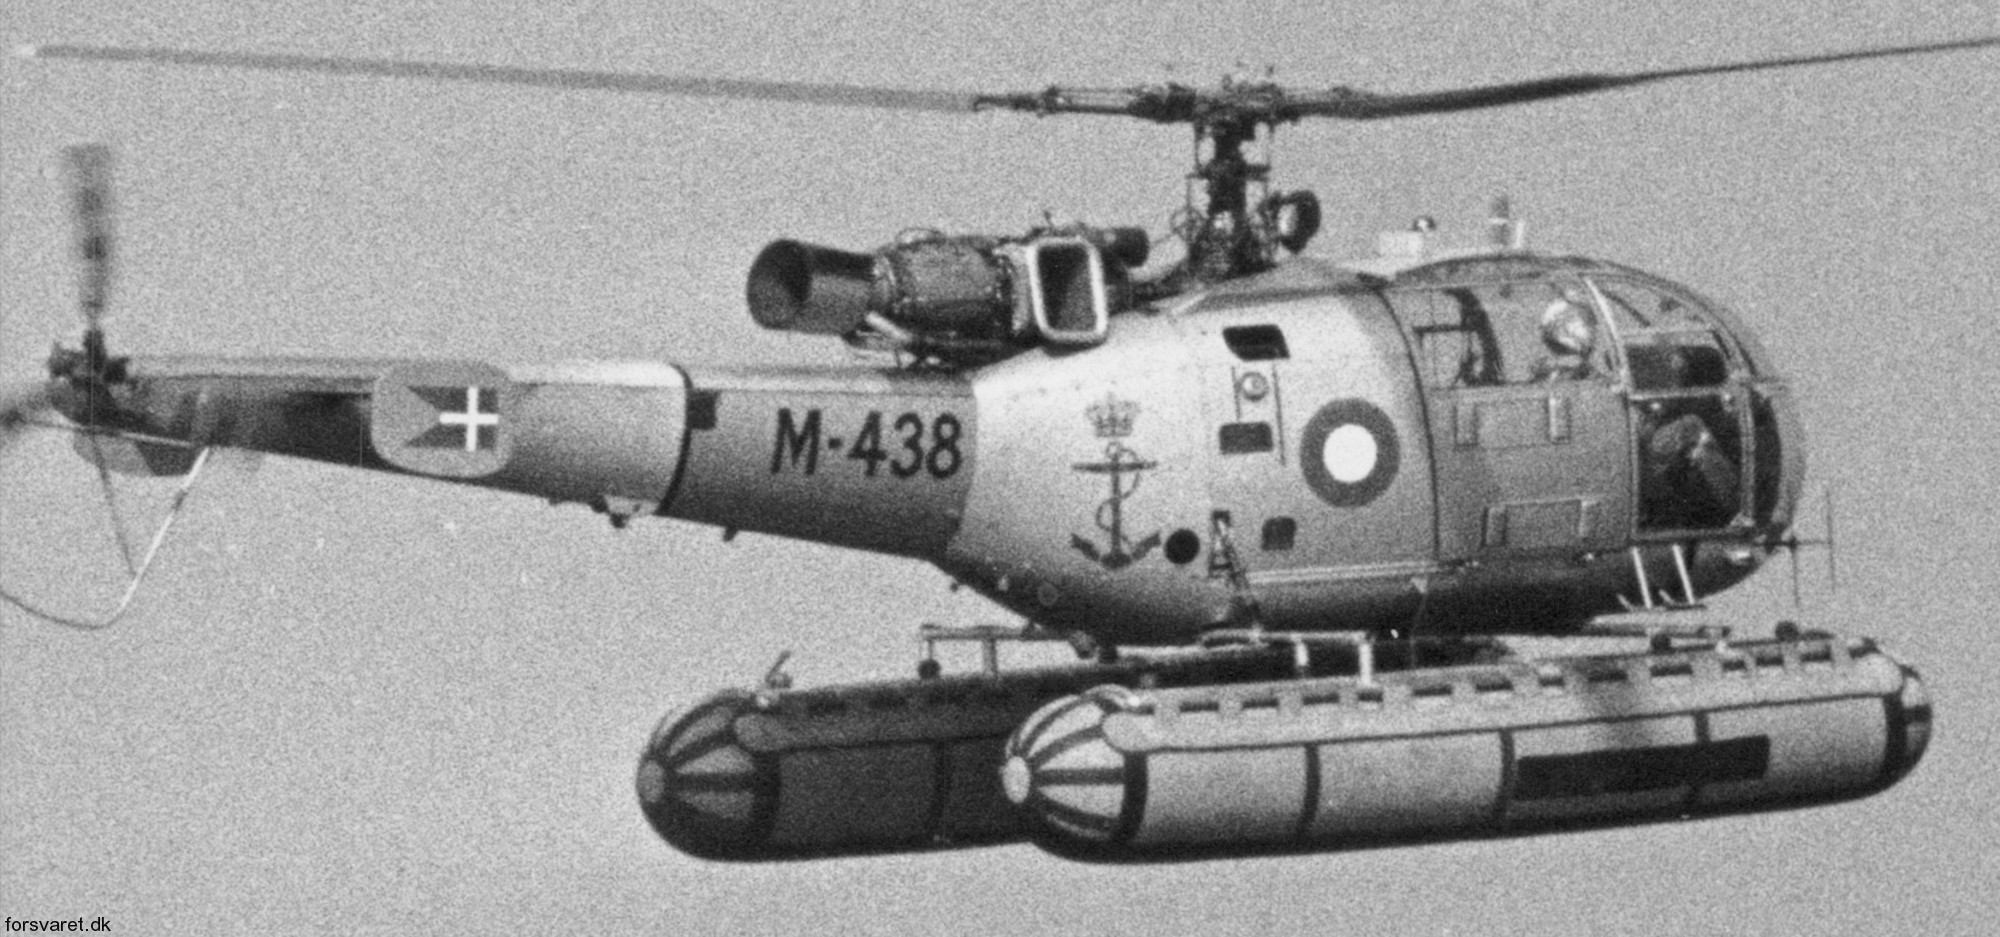 sa 316b alouette iii helicopter royal danish navy søværnet kongelige danske marine sud aviation m-438 02